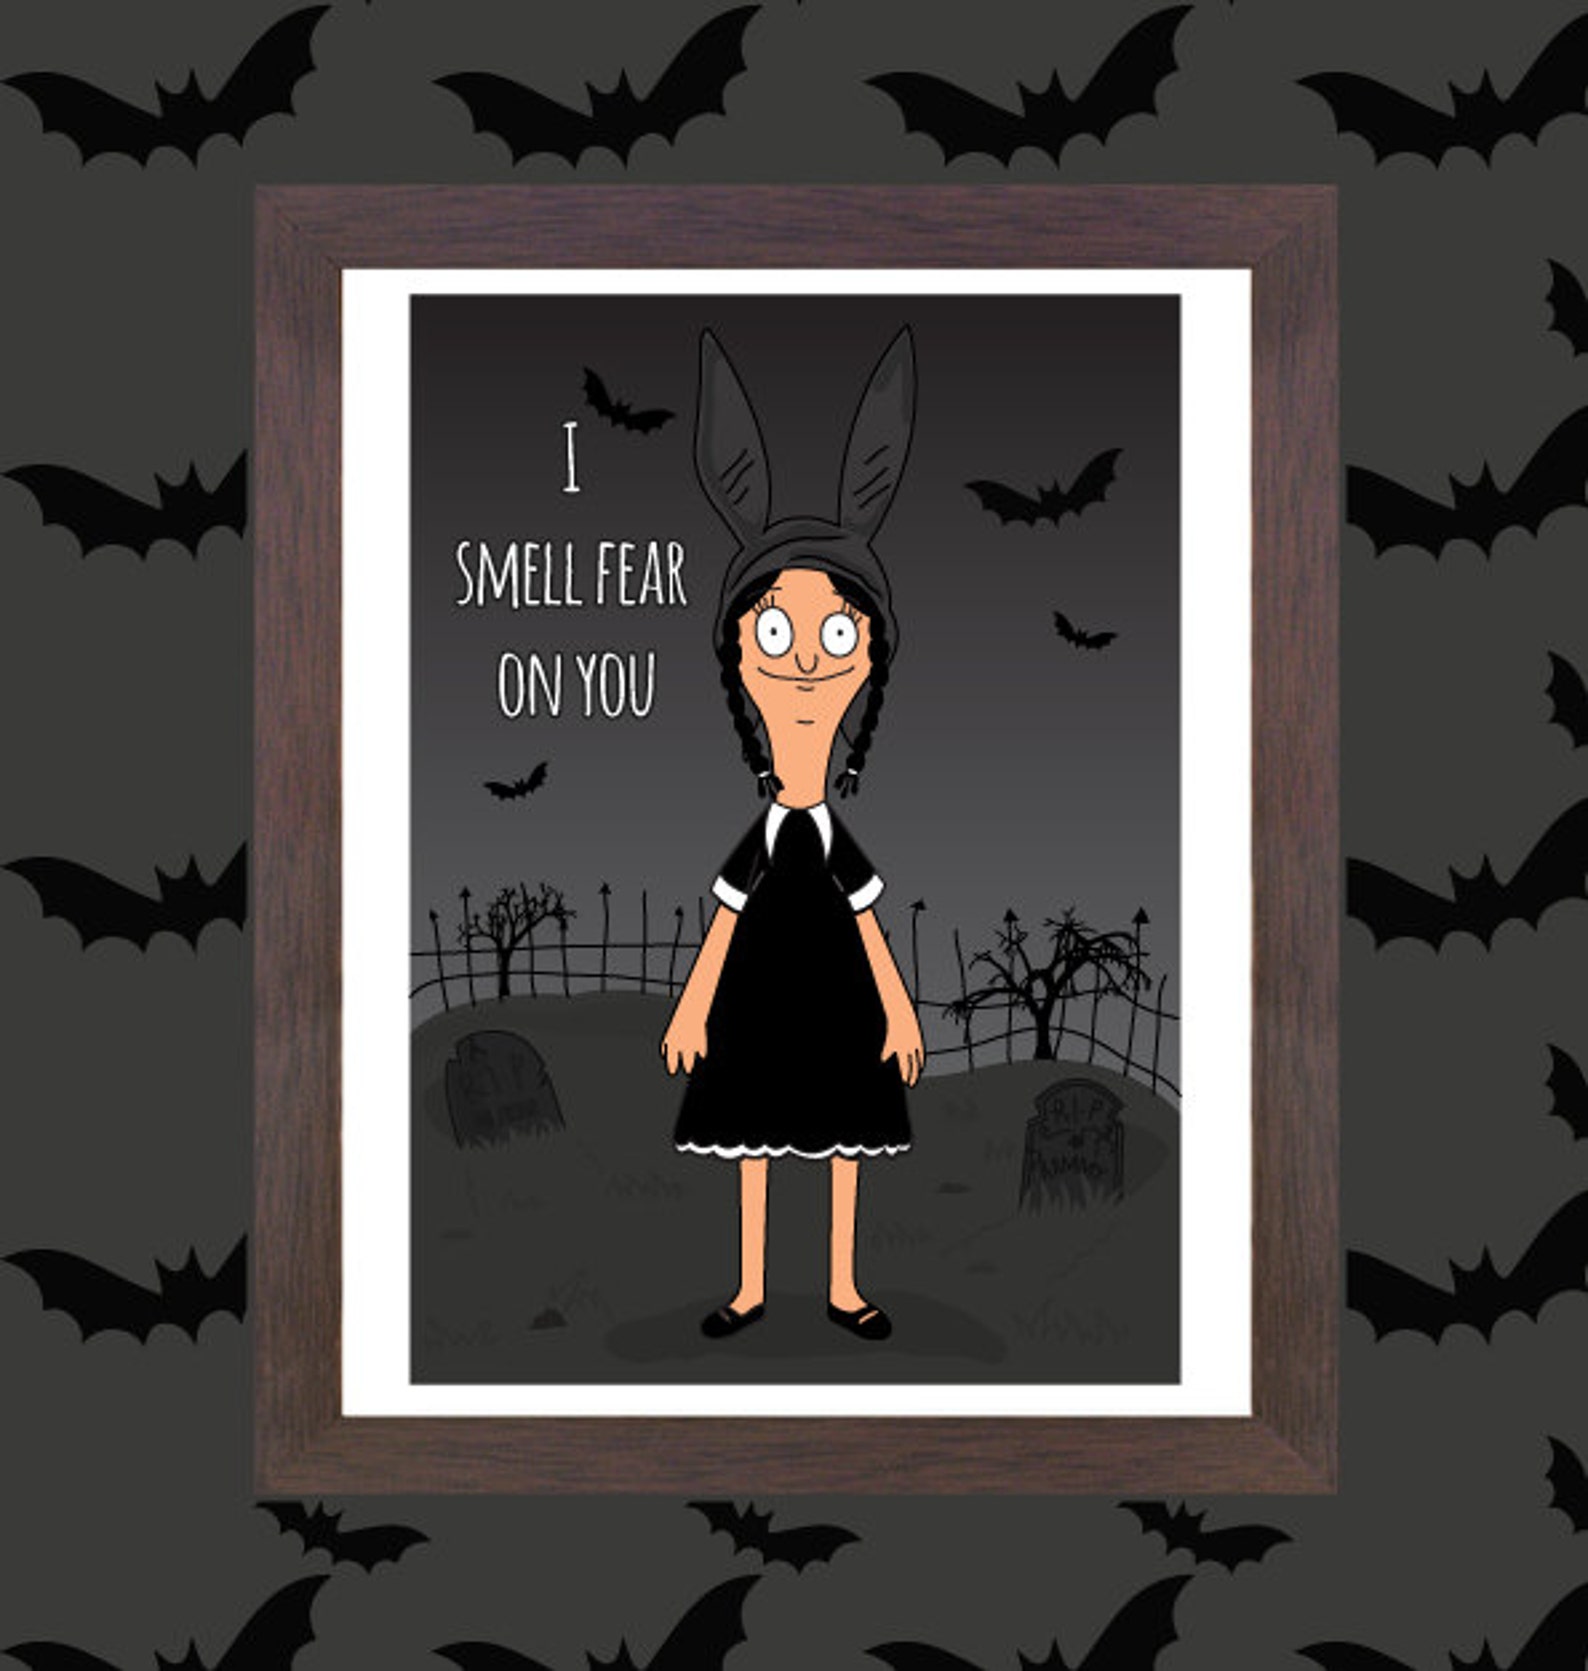 Fan art non ufficiale Louise Belcher x Wednesday Addams image 0.